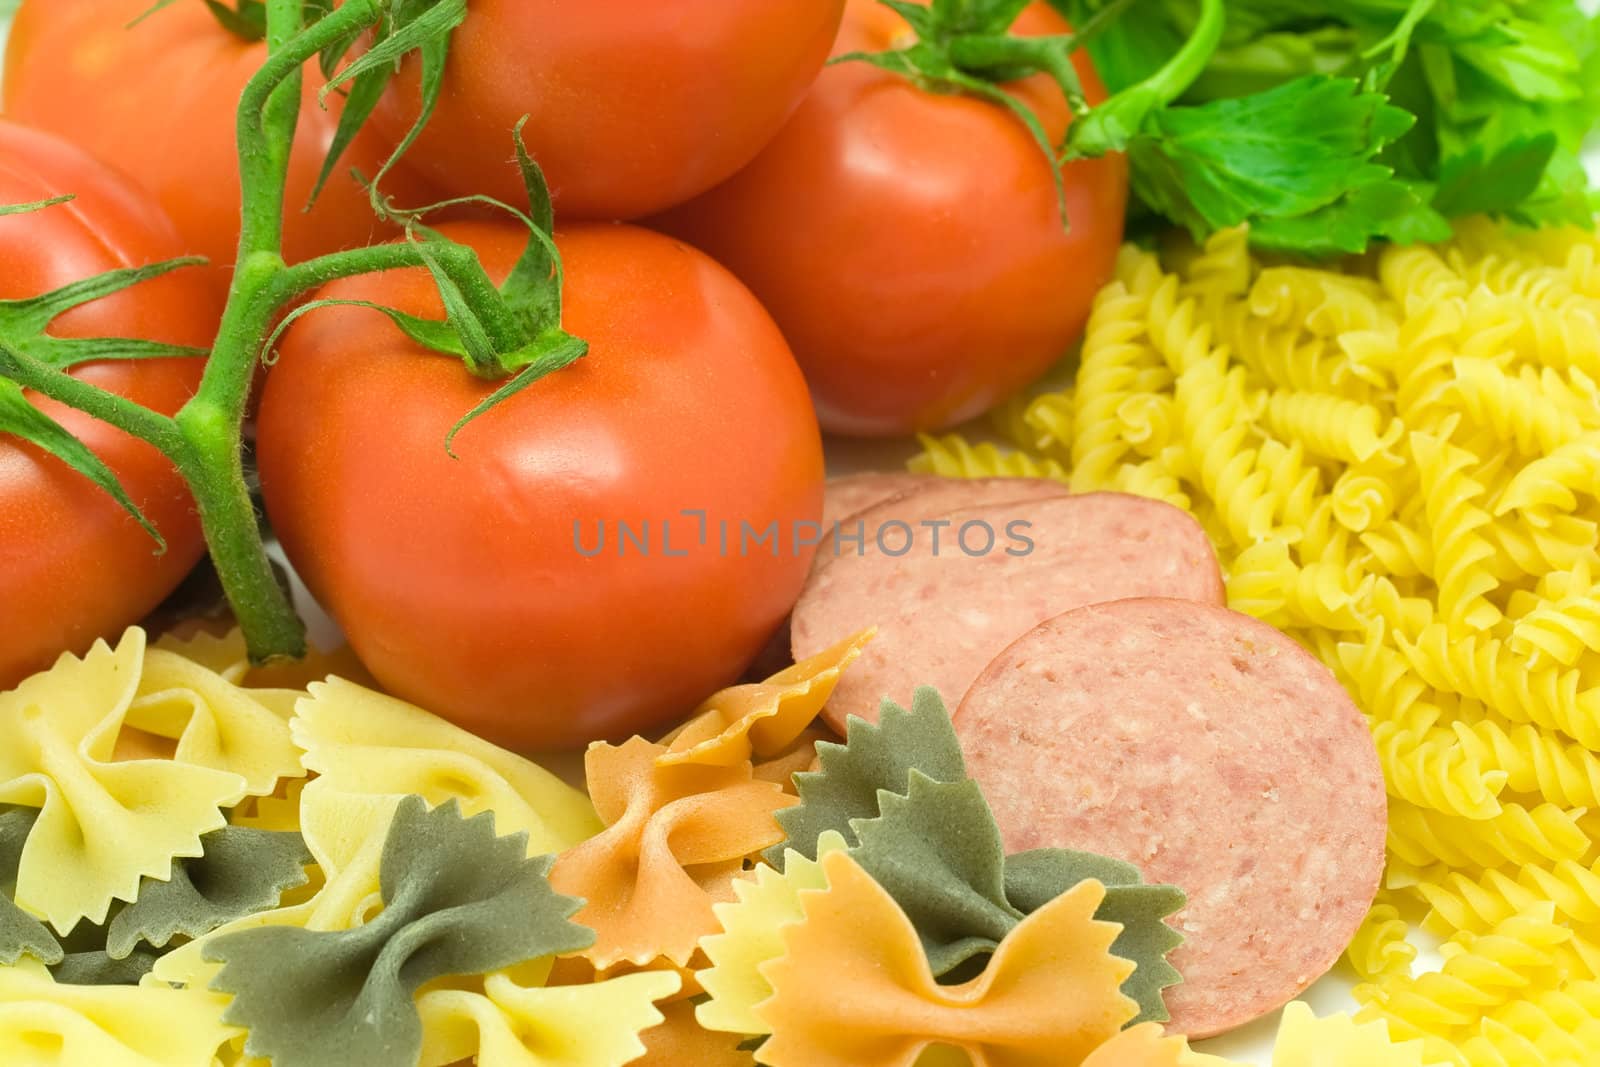 Ingredients for Italian dinner by Hbak